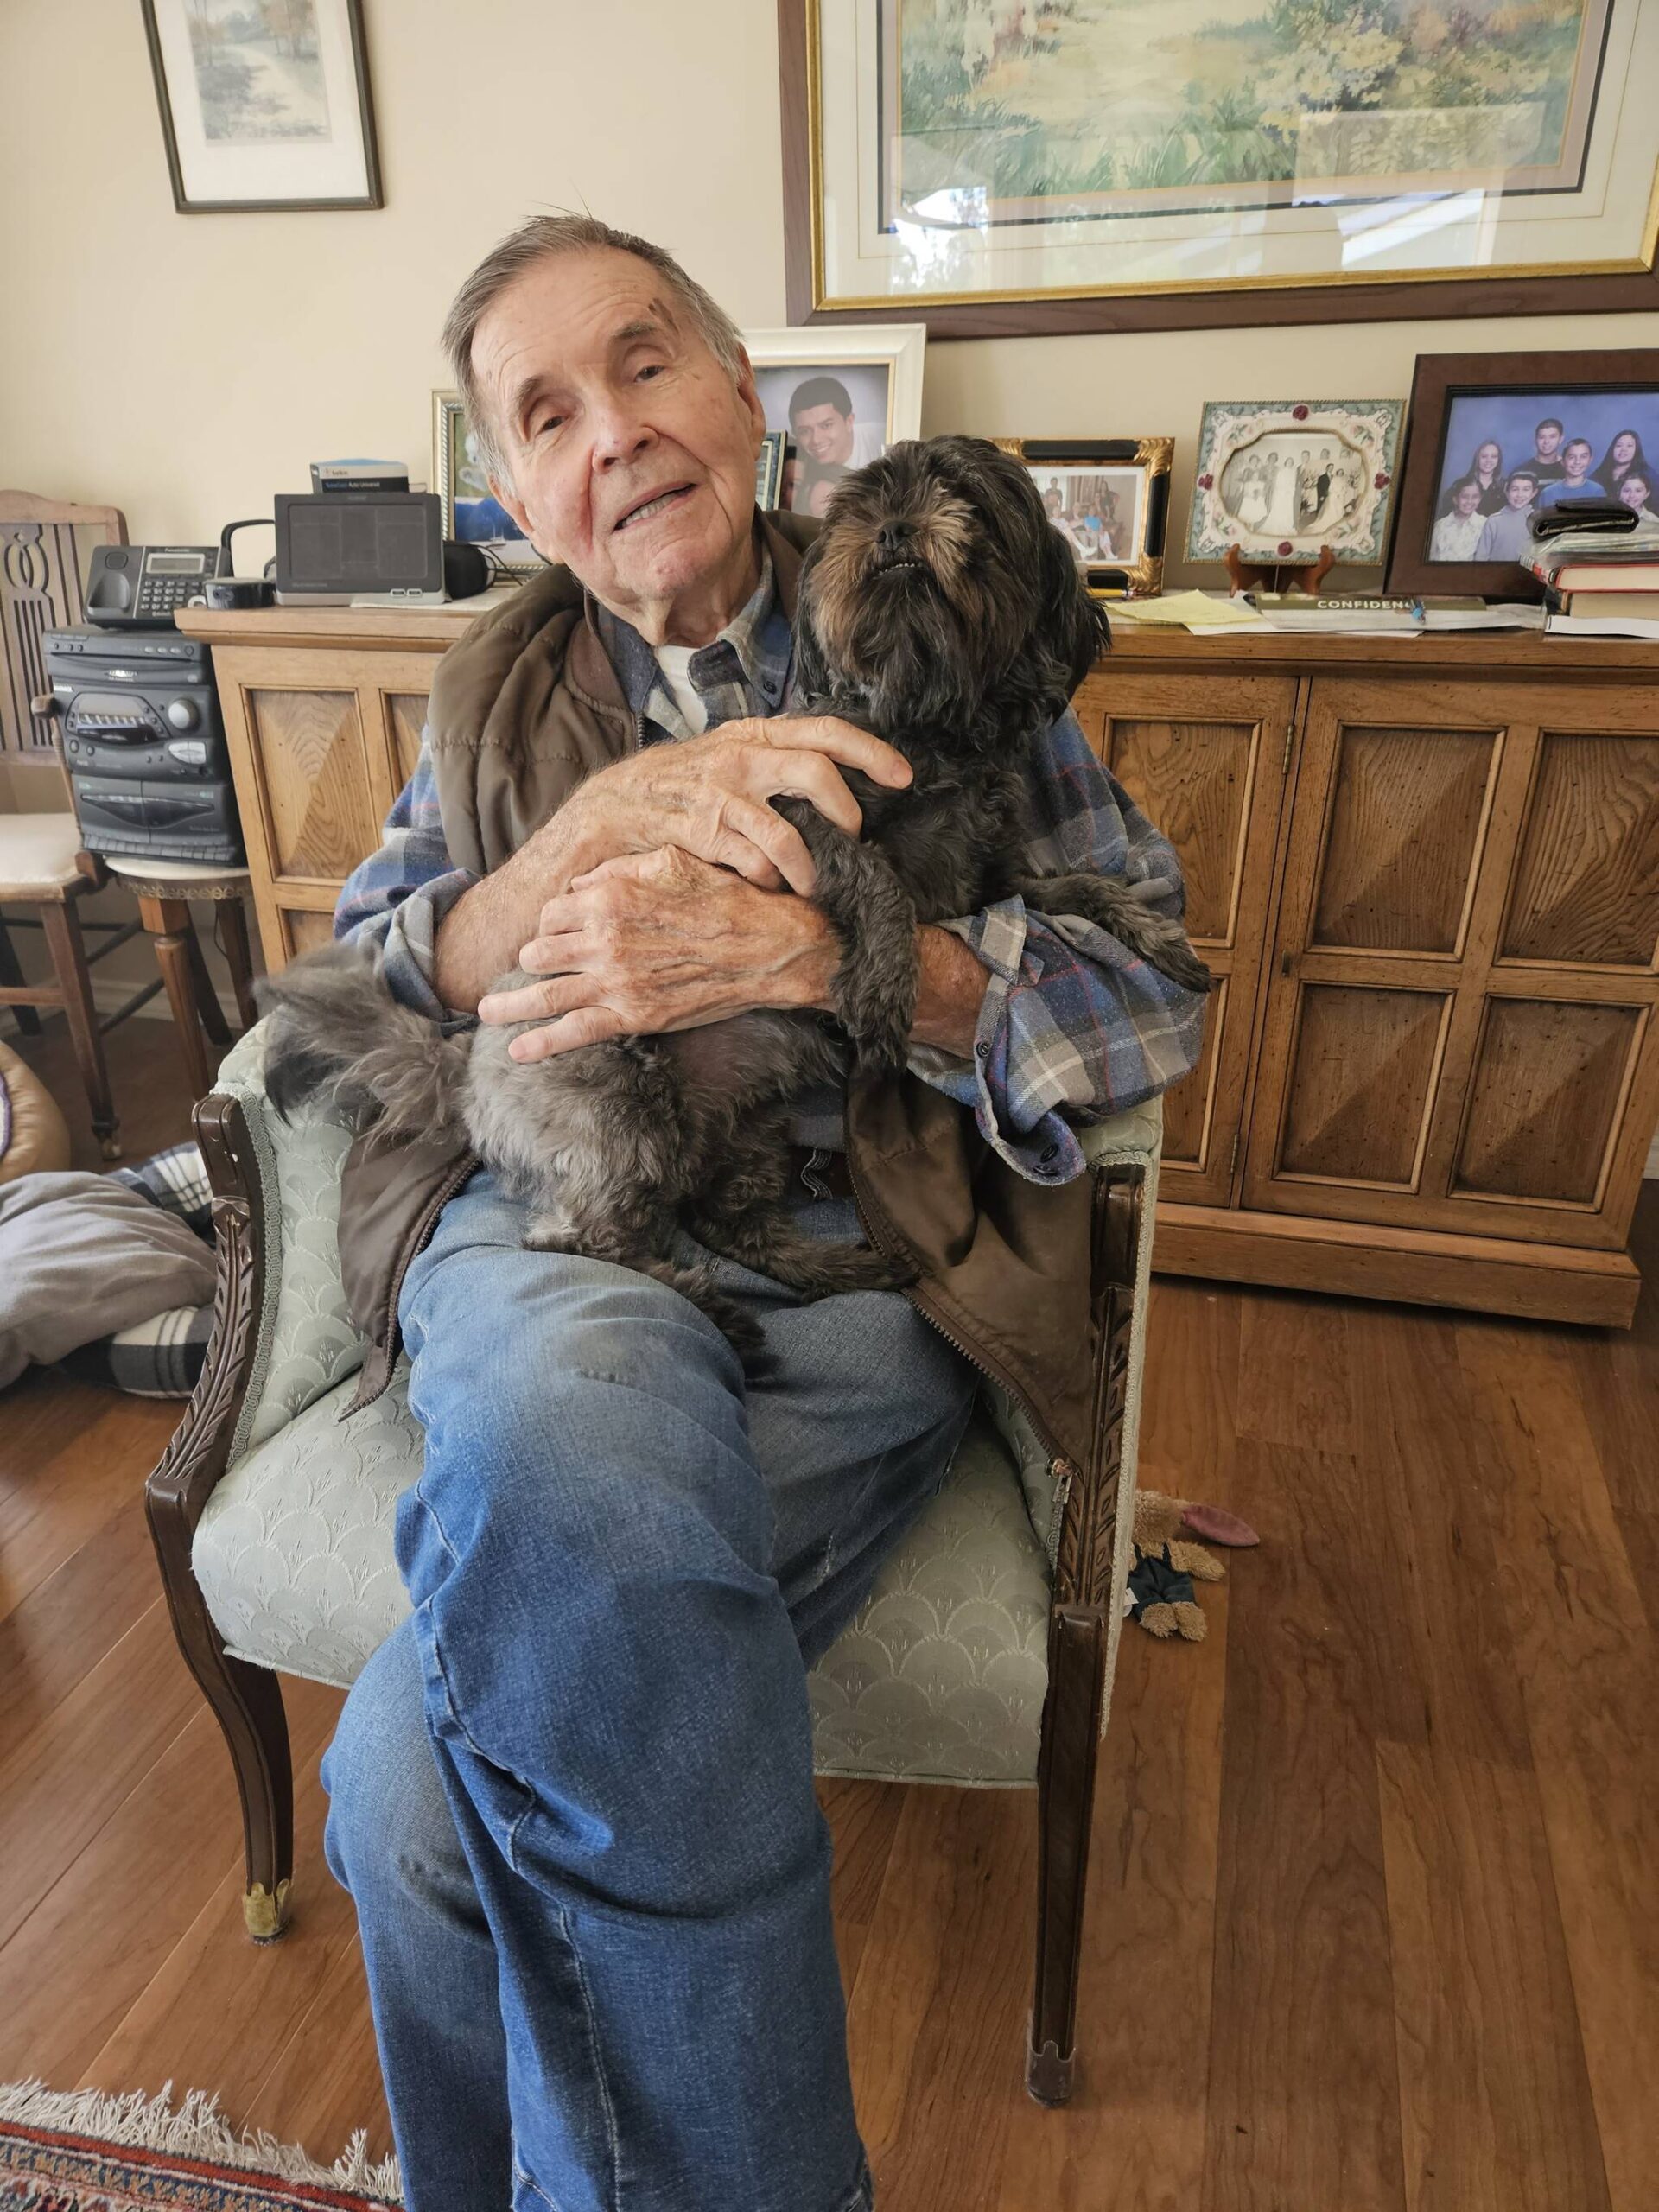 Courtesy photo
Don Strome, 94, with his dog, Minny.